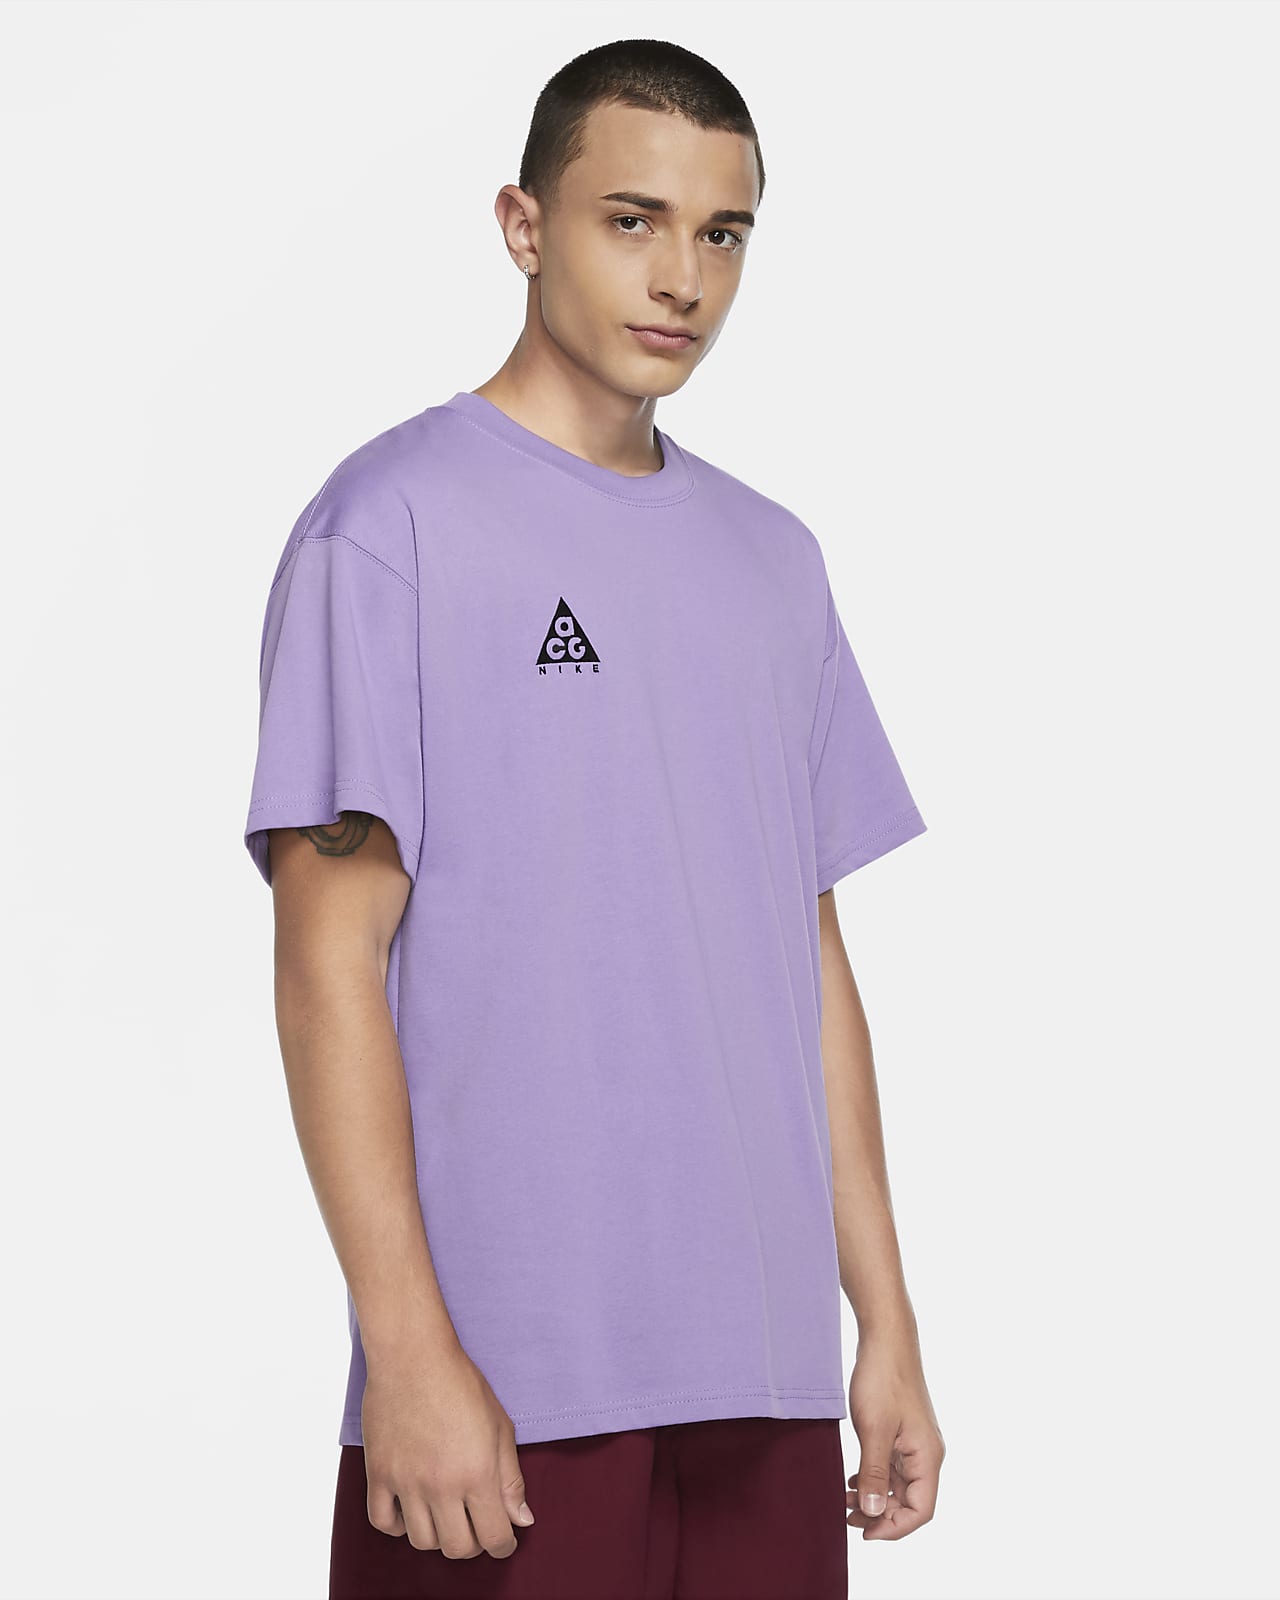 nike shirt purple